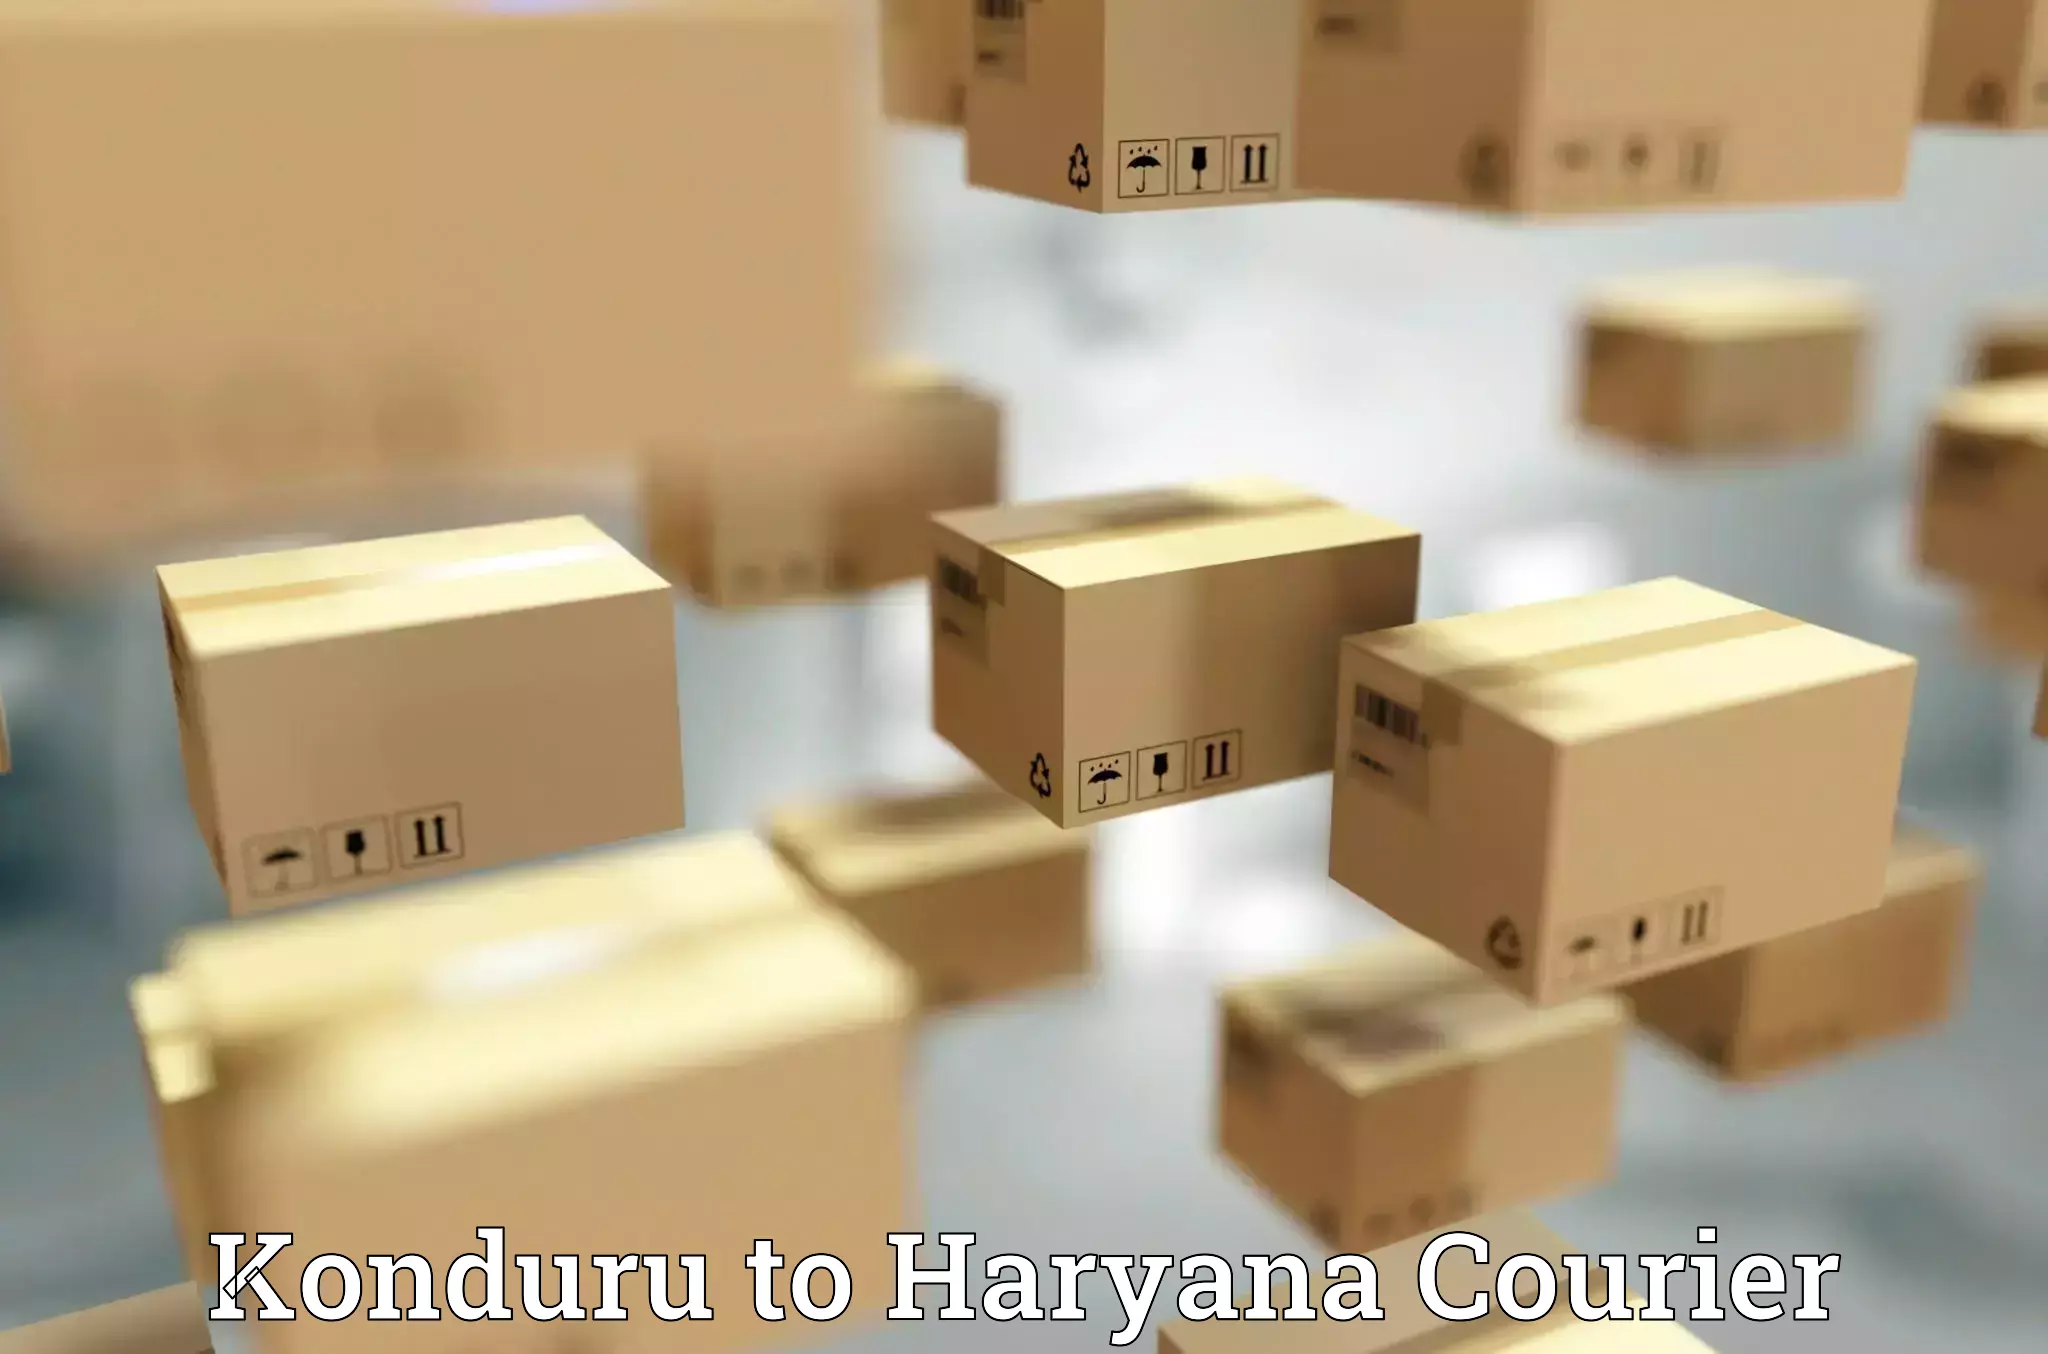 State-of-the-art courier technology Konduru to NCR Haryana